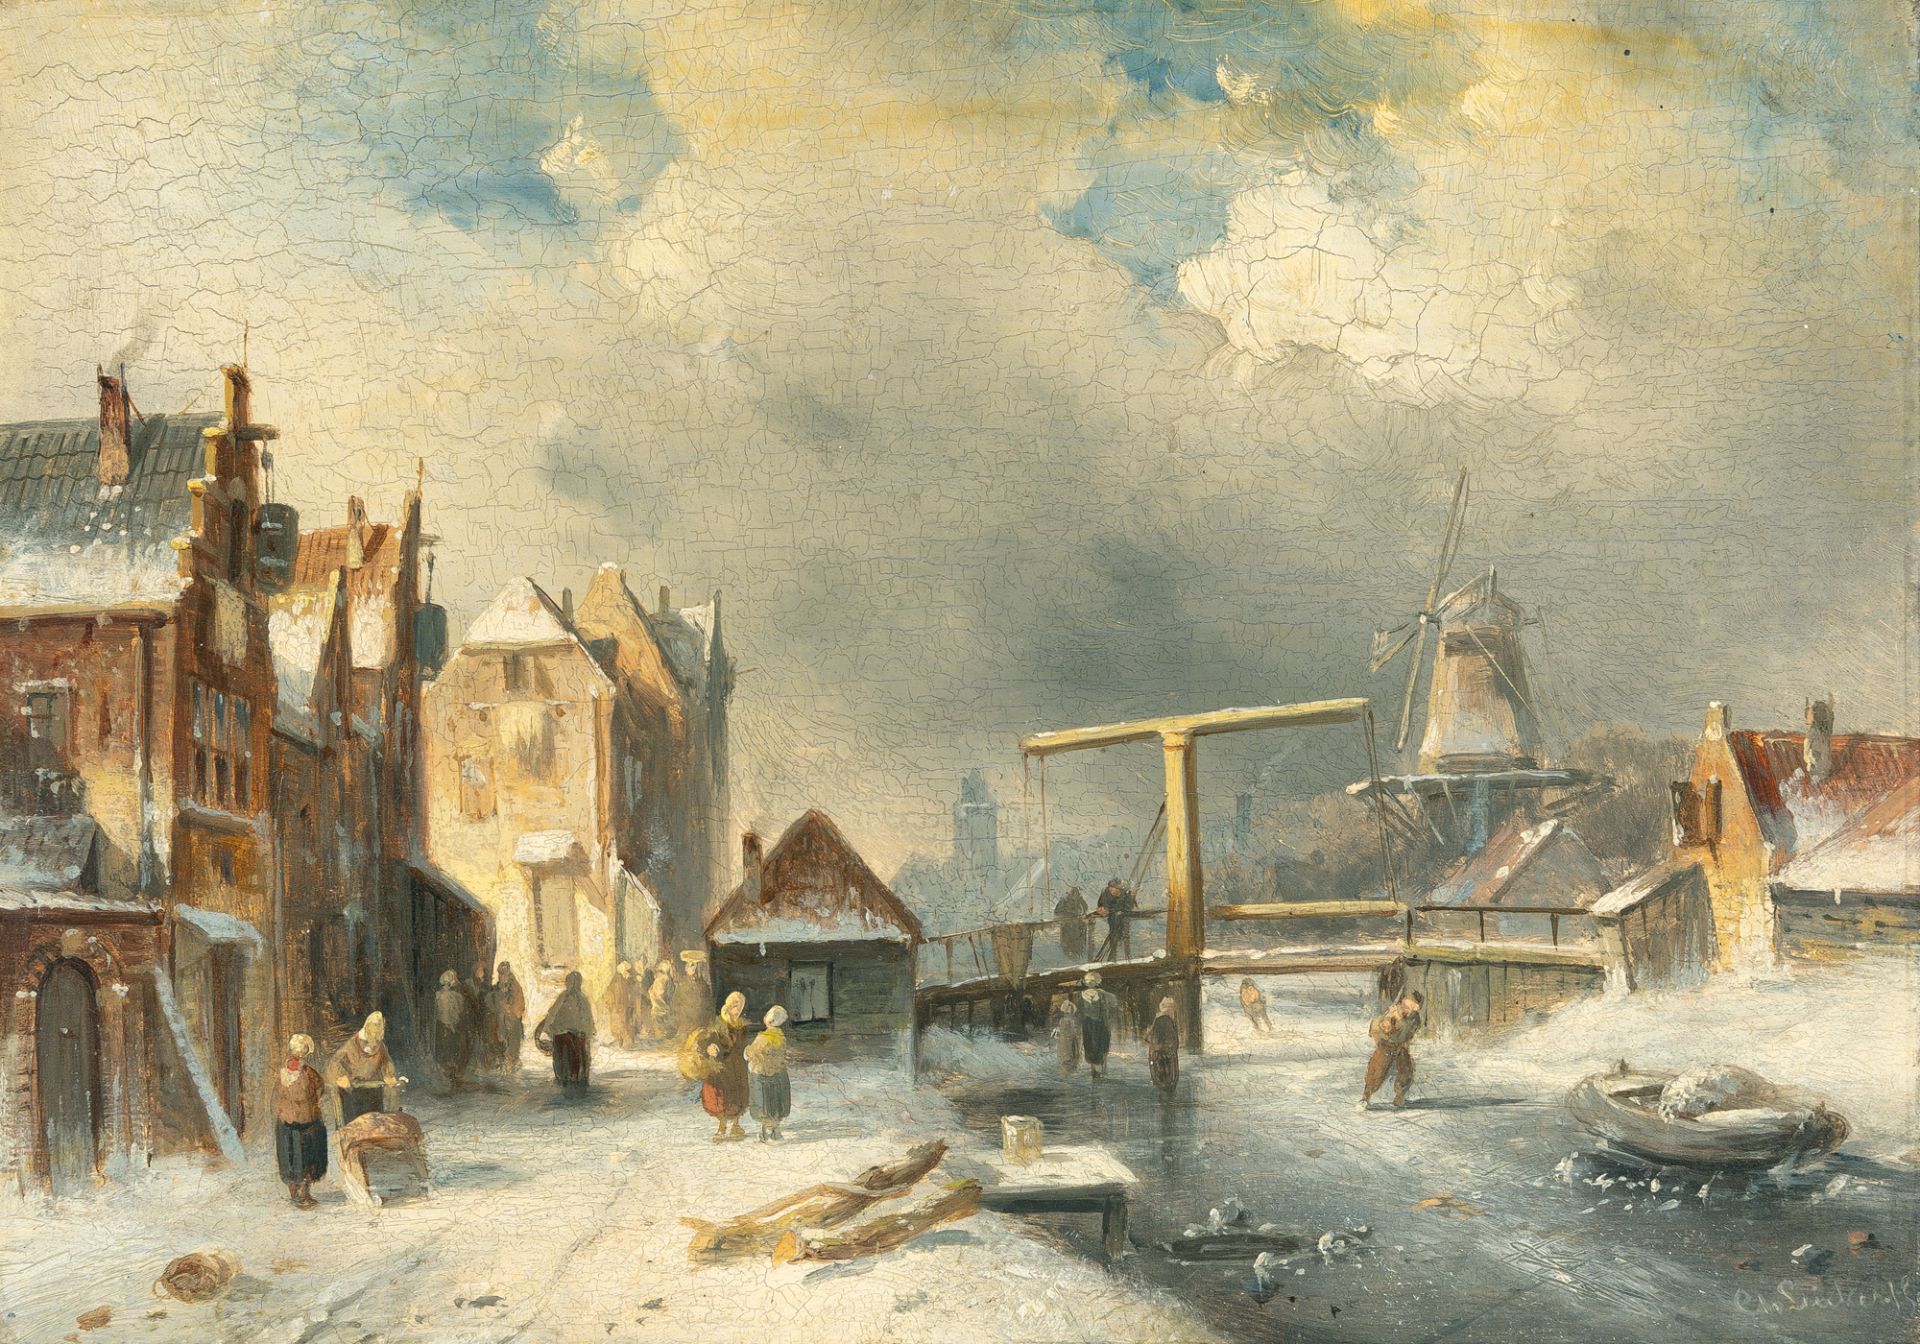 Charles Henri Joseph Leickert – Winter village scene on a canal with a Dutch windmill